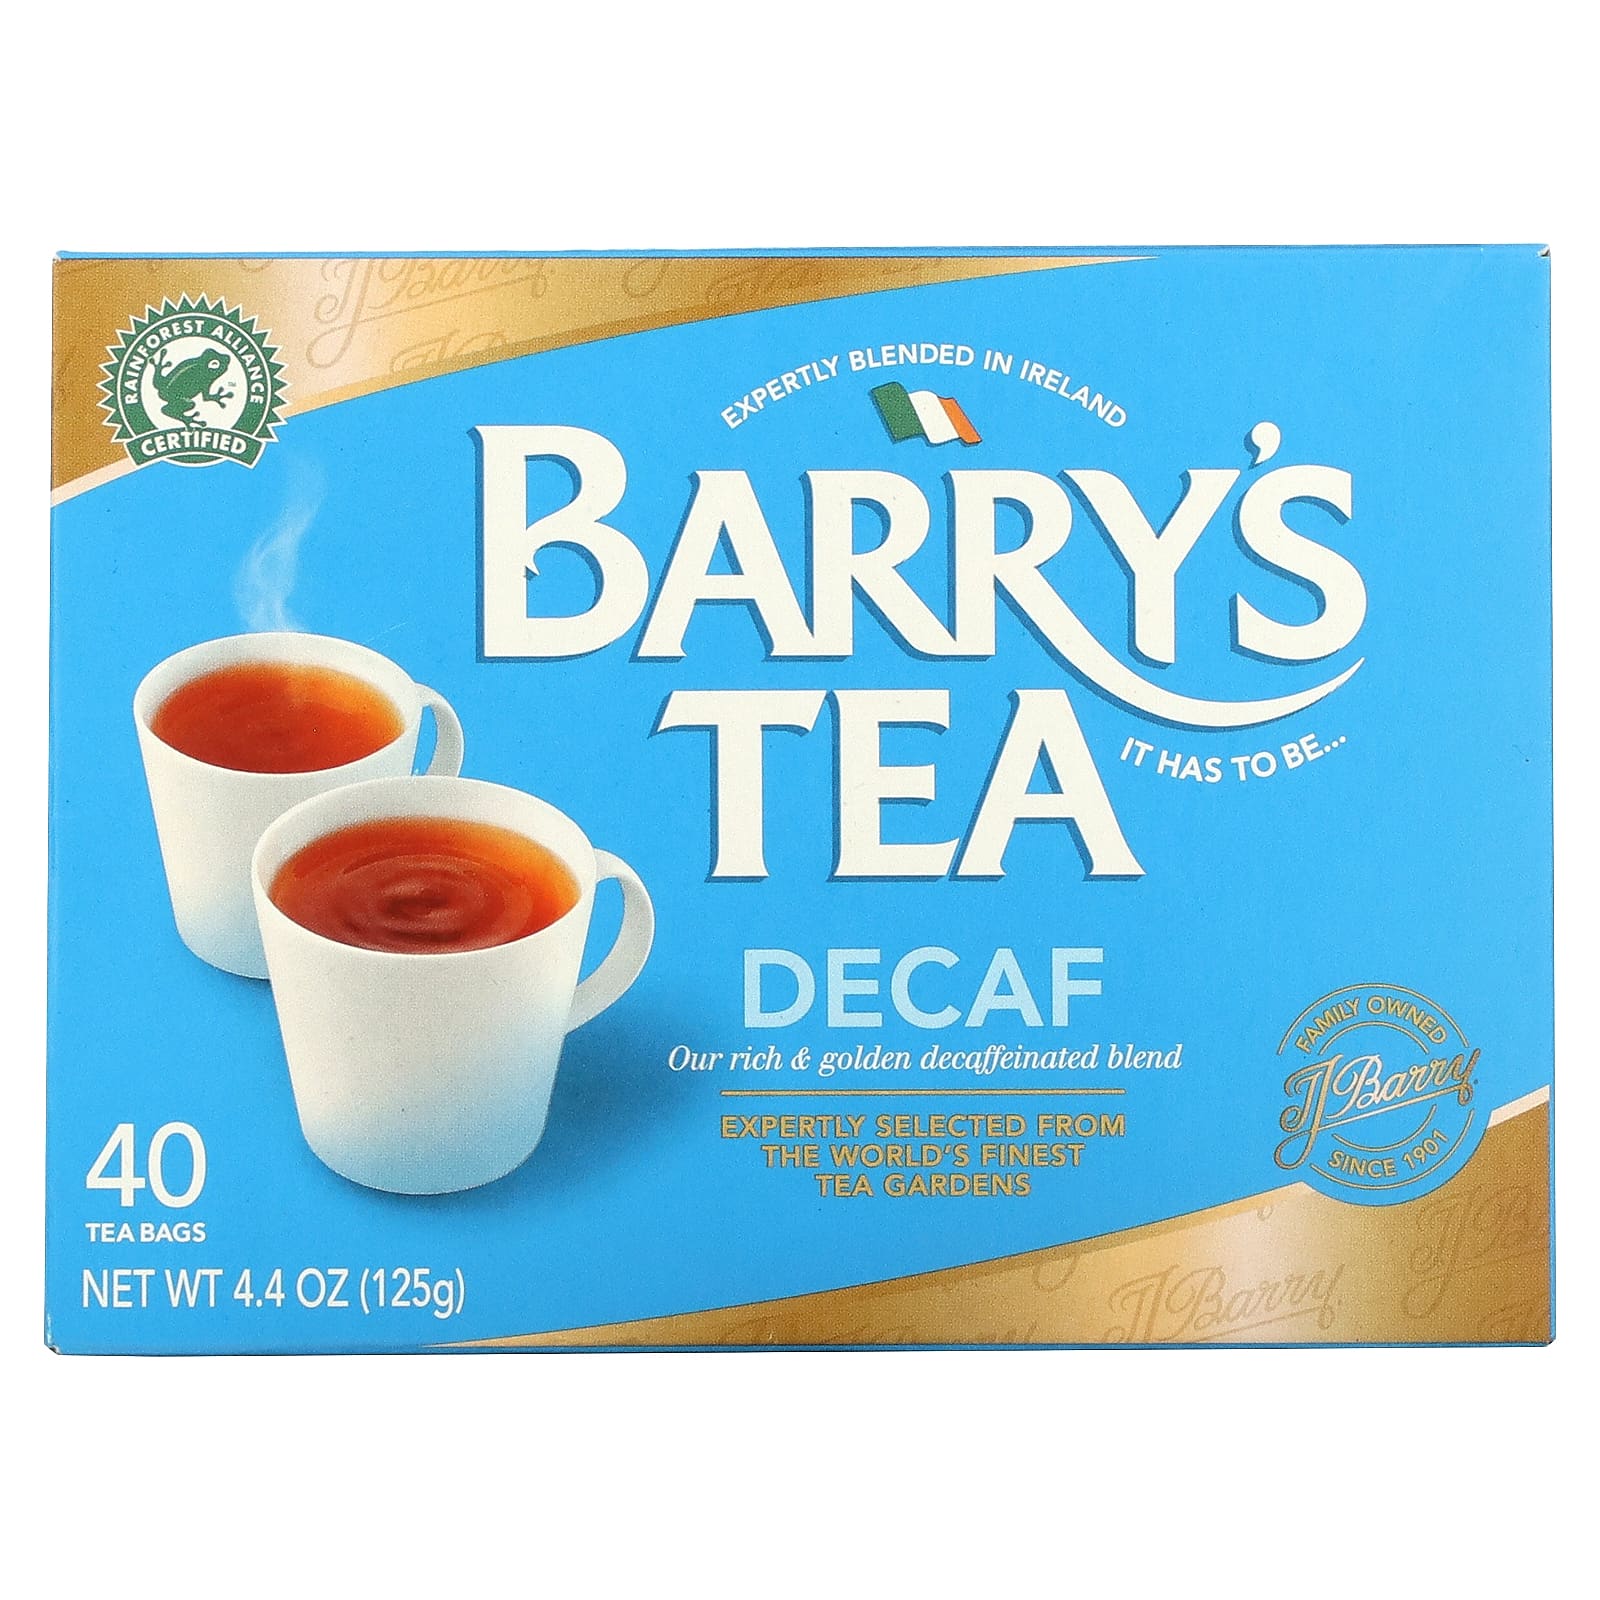 Return fertilizer Fable Barry's Tea, Mezcla descafeinada, 40 bolsas de té, 4.4 oz (125 g)